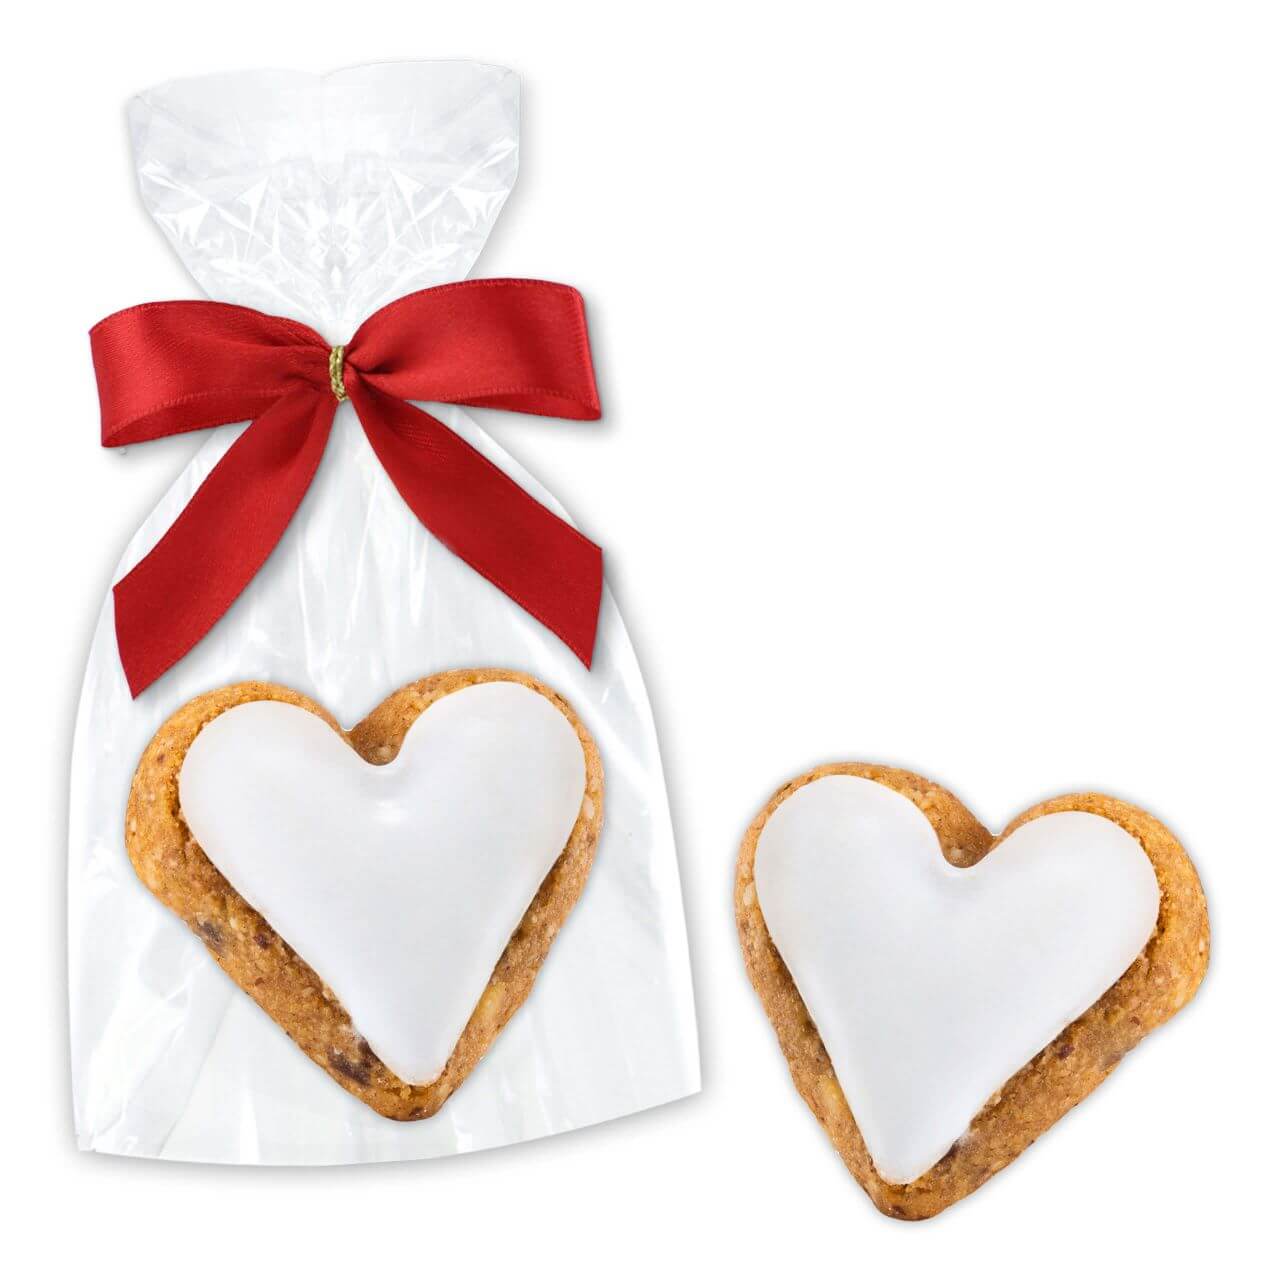 Cinammon-apple Heart Cookie single packed